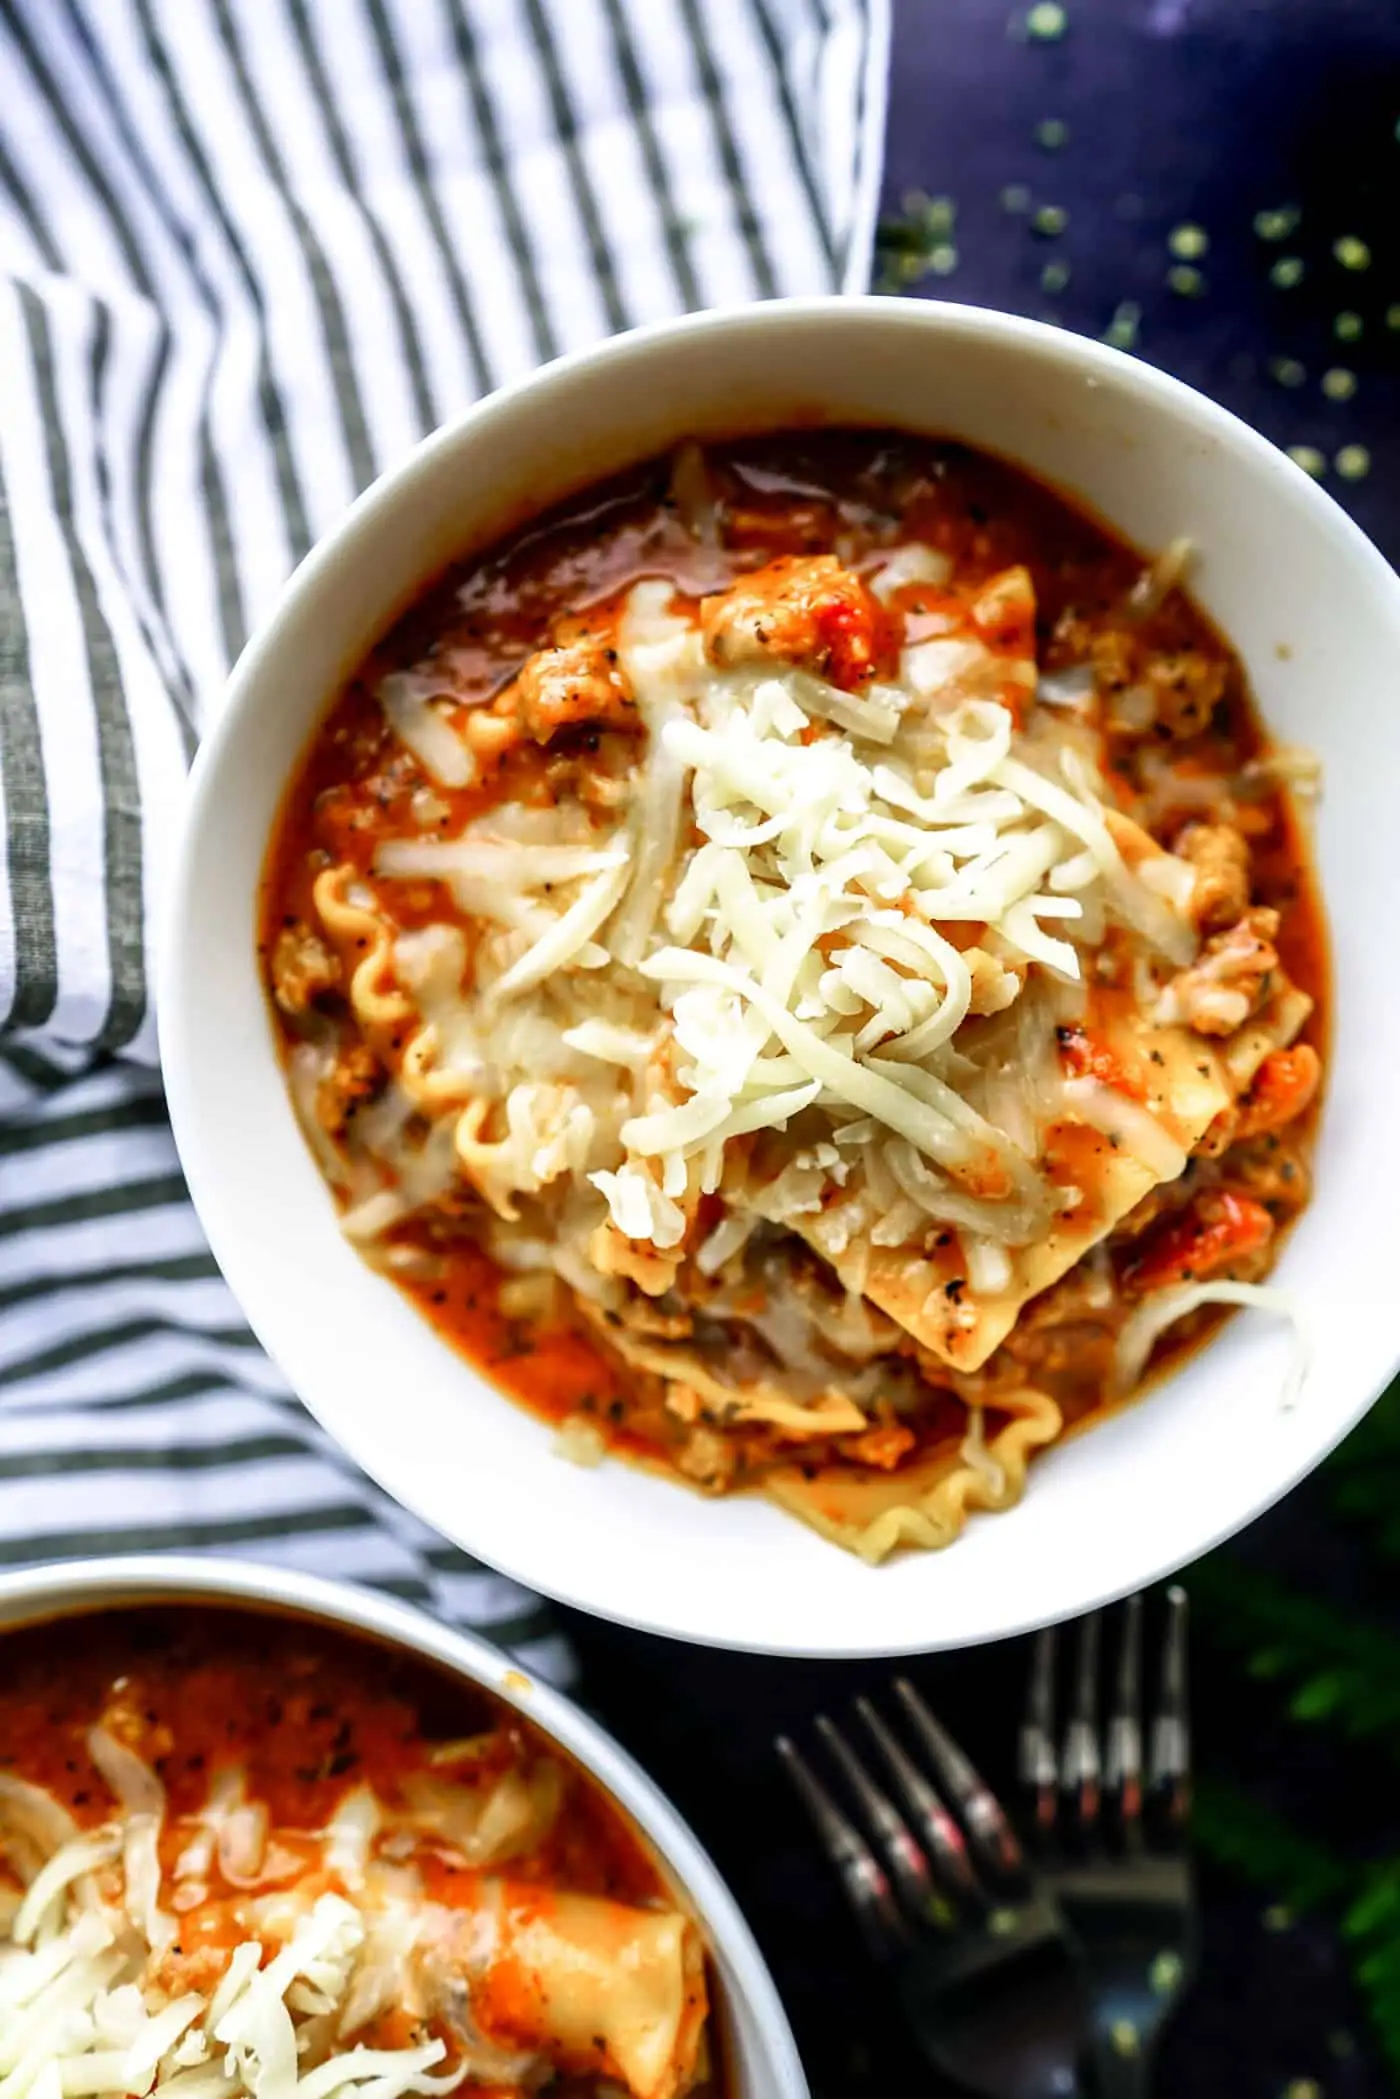 A Lily Love Affair shares an easy dinner recipe for Instant Pot Laszy Lasagna